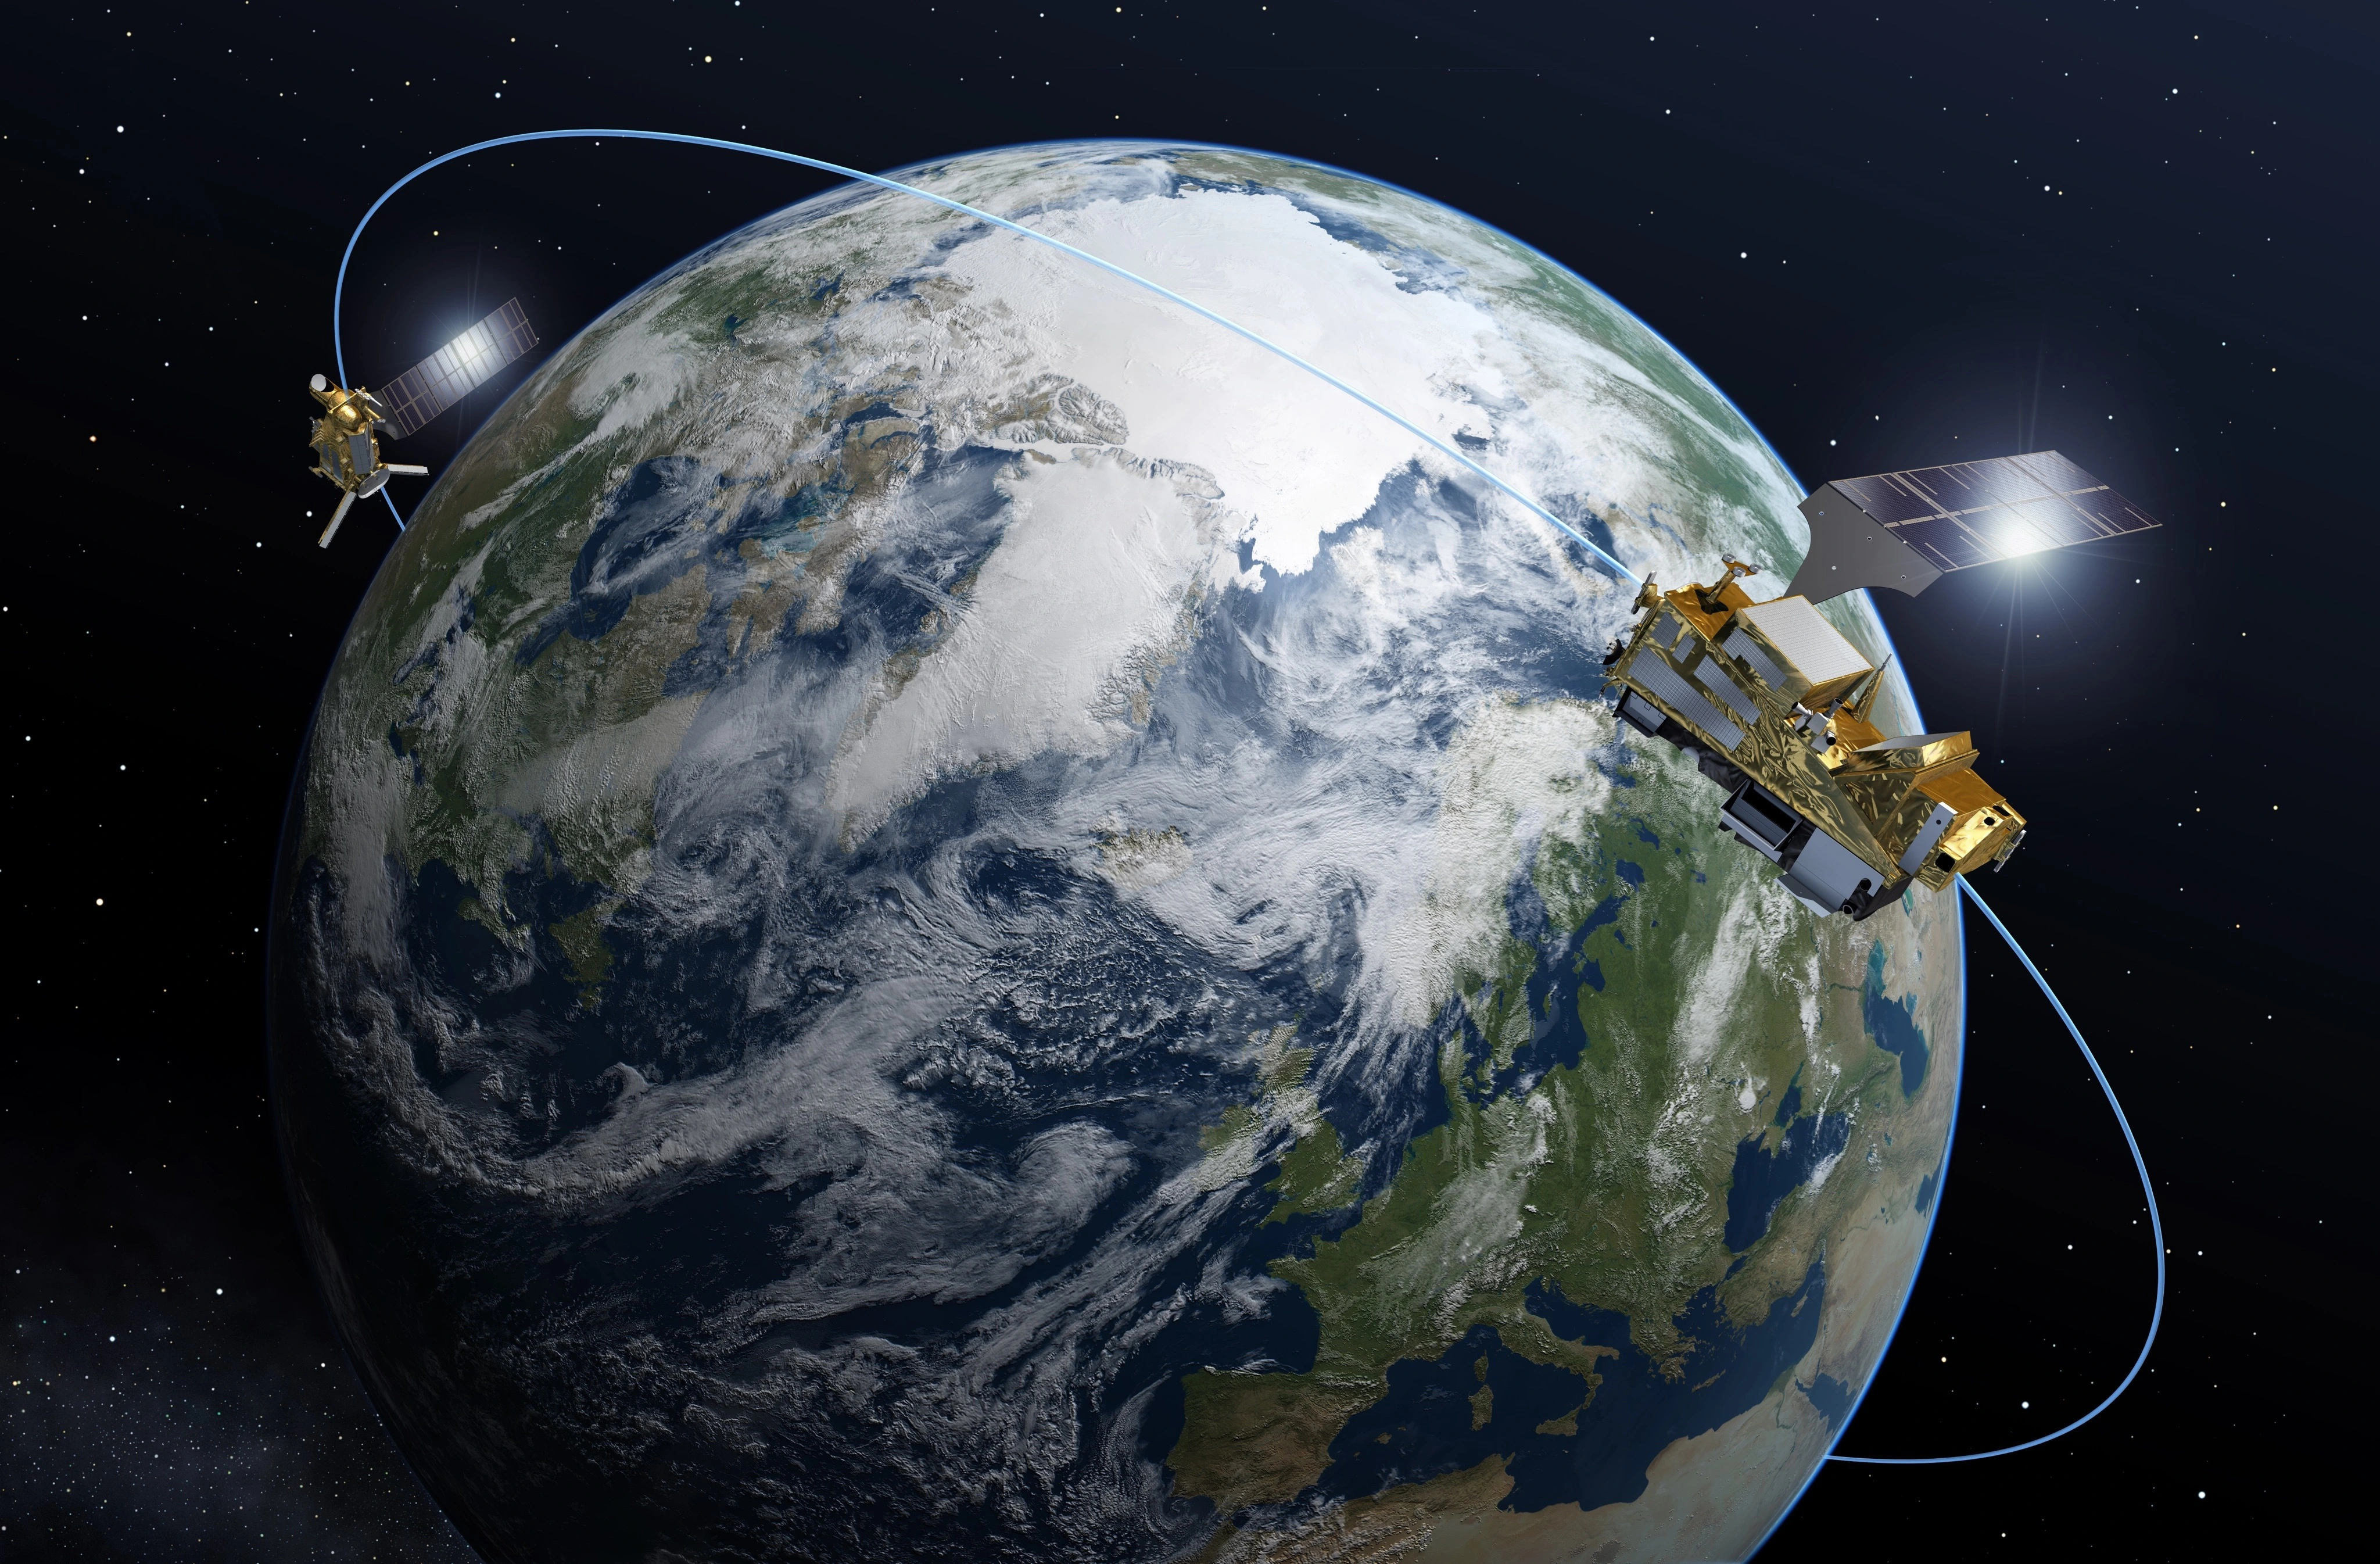 Kongsberg Defence & Aerospace – MetOp-SG satelittene